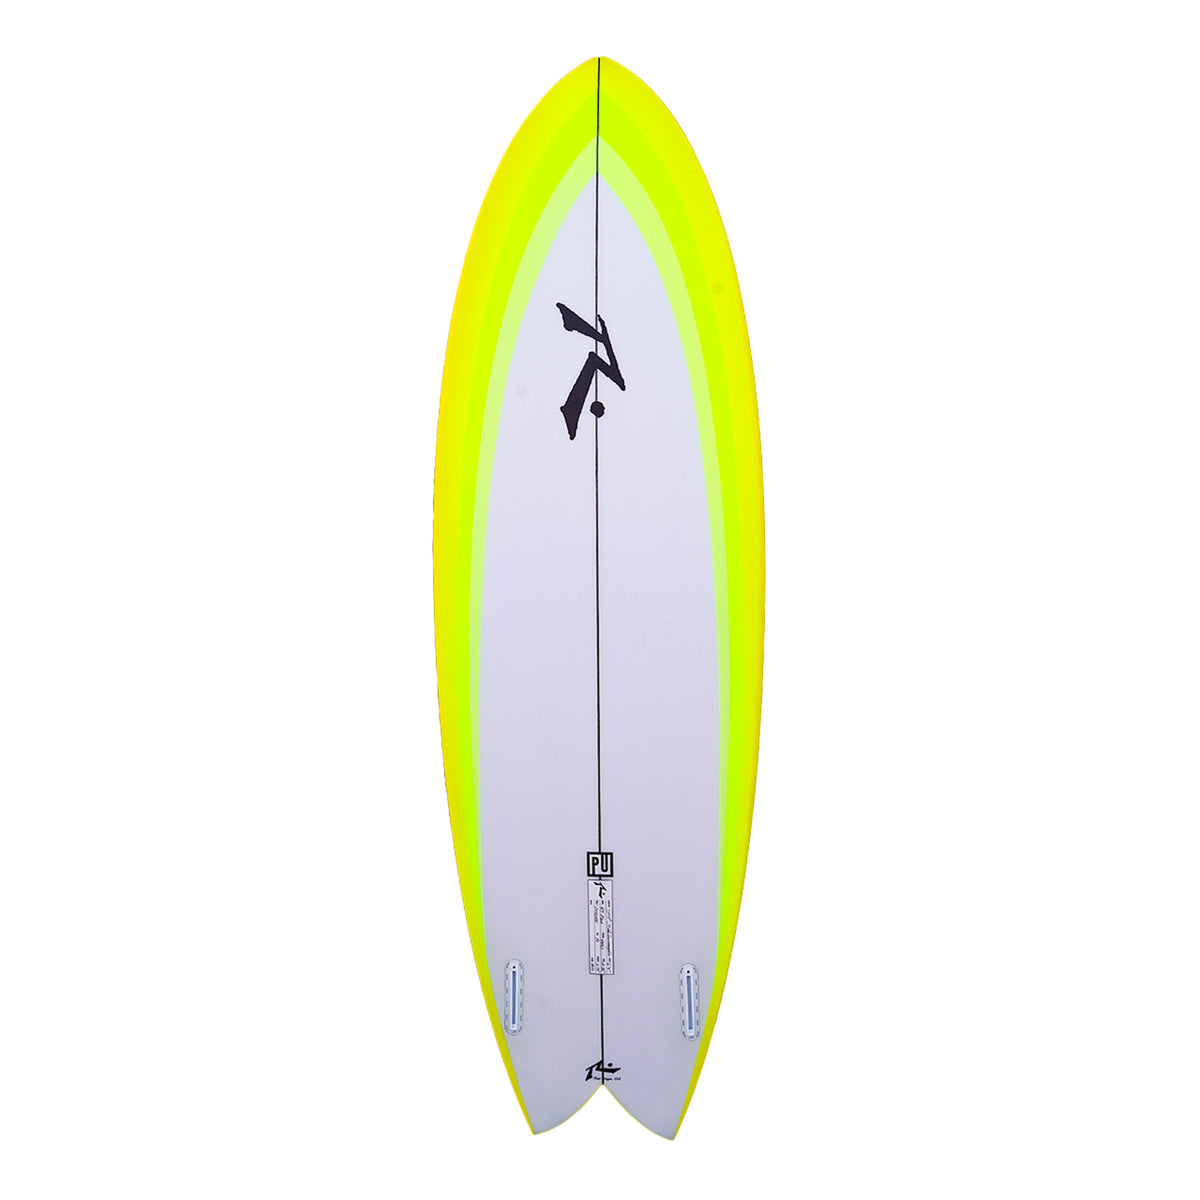 419fish - Alternative - Rusty Surfboards - Top View - Yellow Bottom